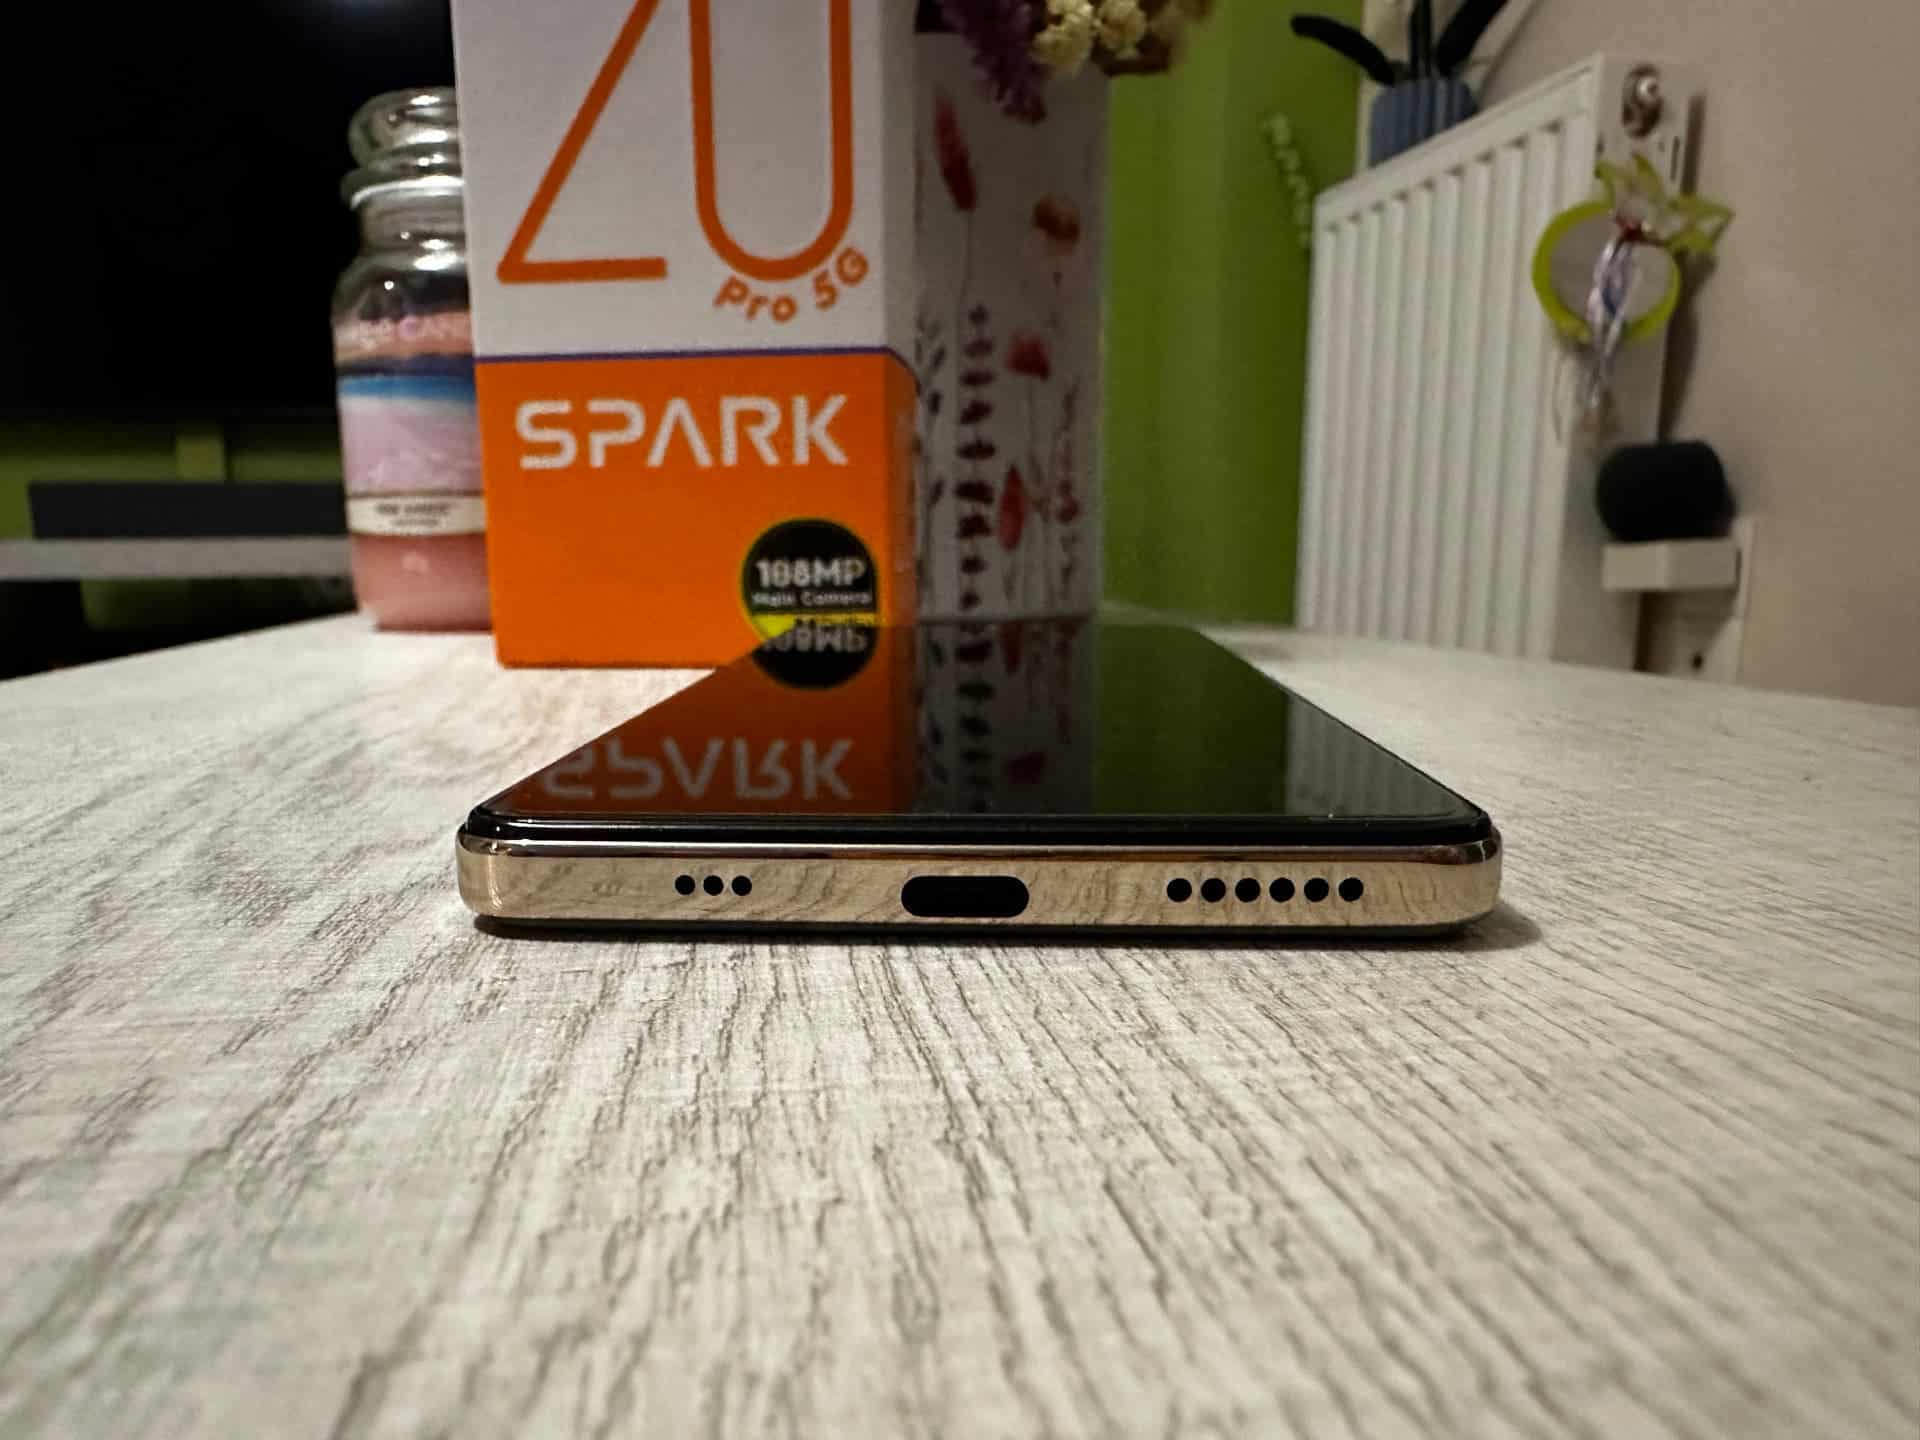 Tecno Spark 20 Pro 5G